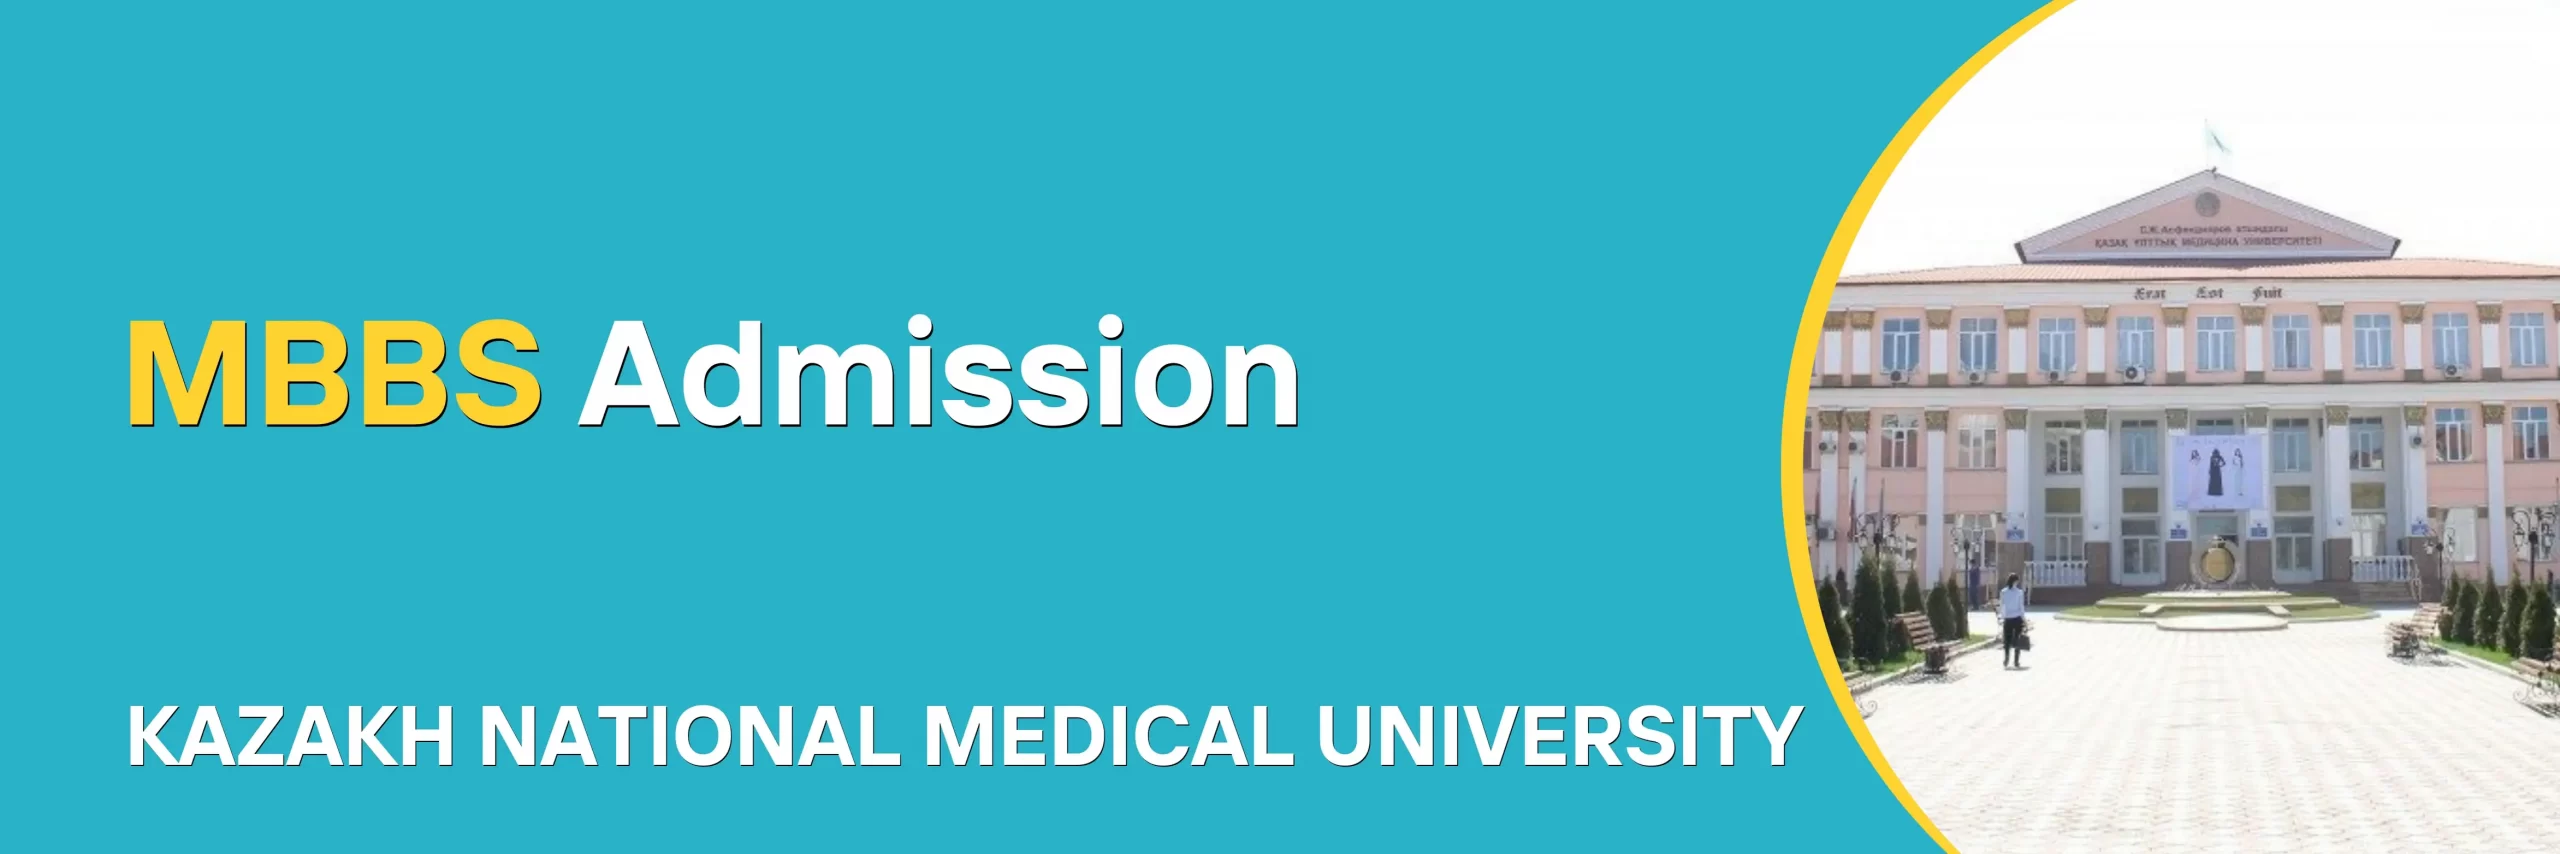 Kazakh-National-Medical-University-admission-in-Kazakhstan